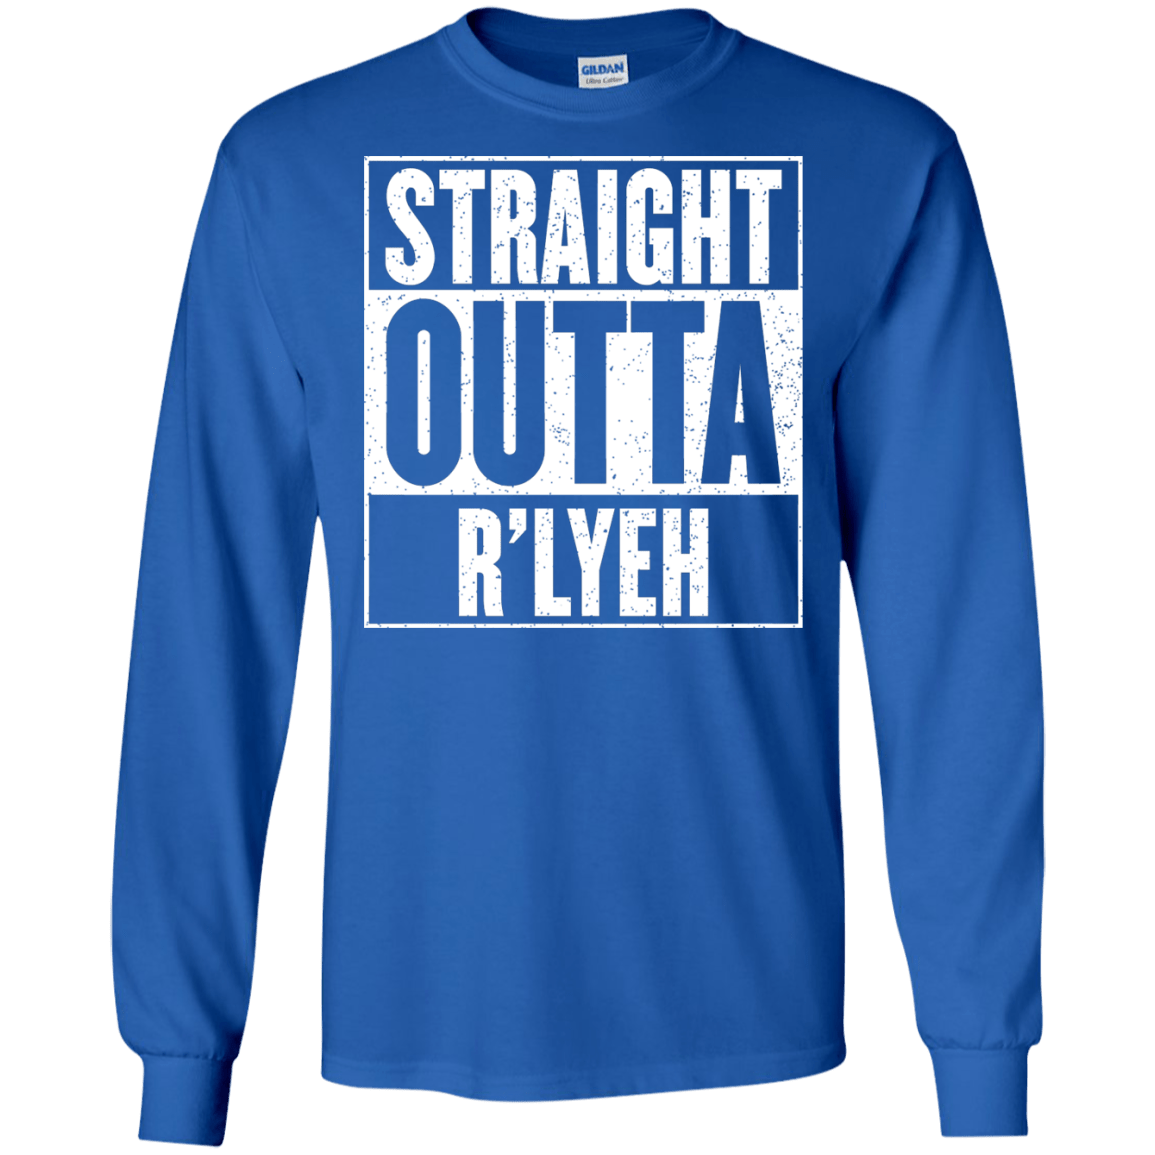 Straight Outta R'lyeh Men's Long Sleeve T-Shirt